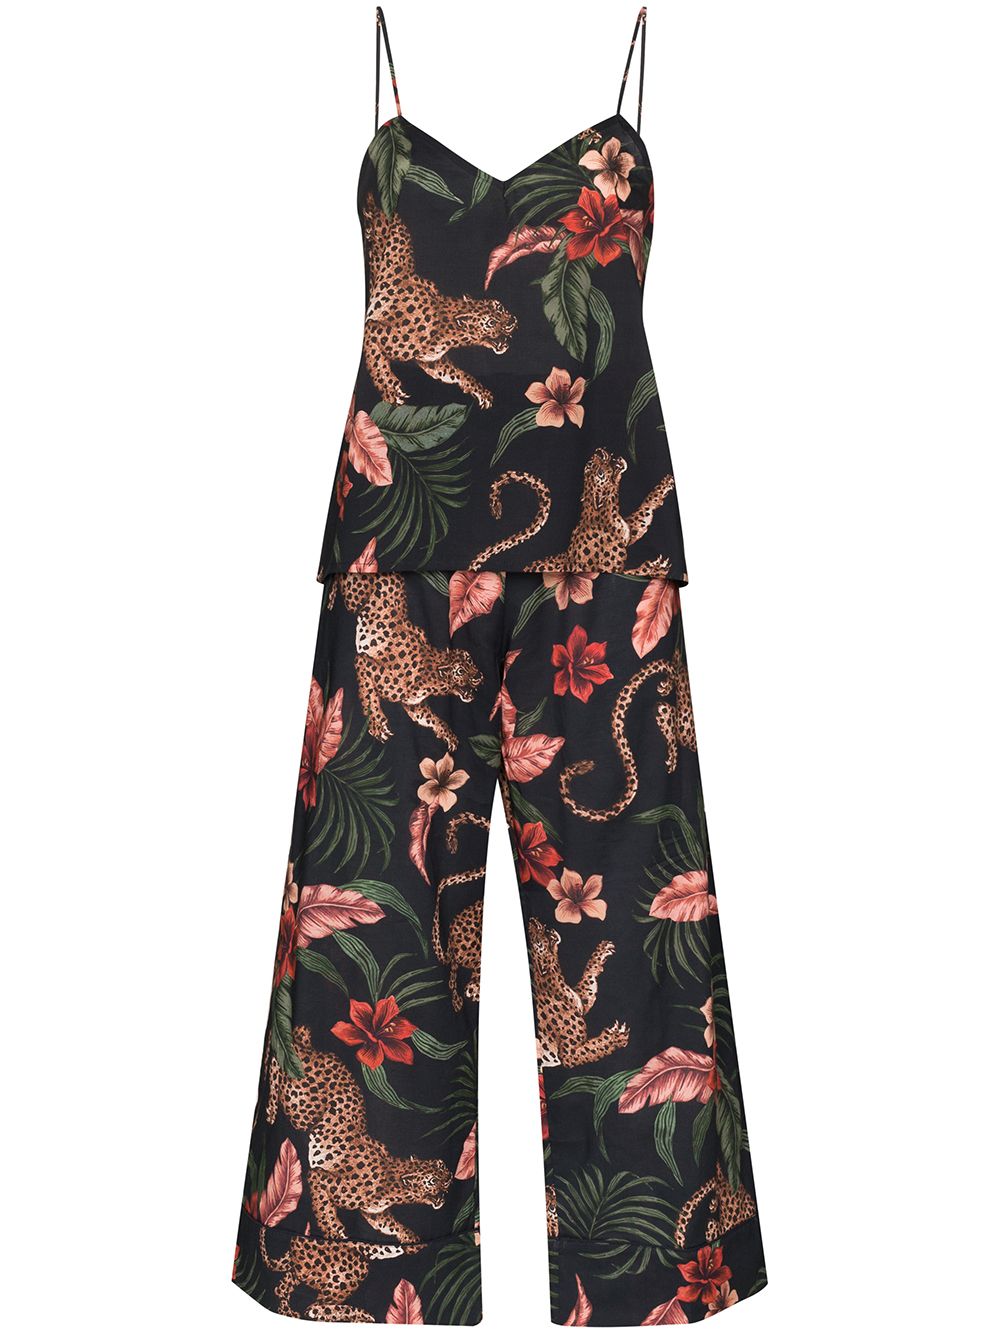 Desmond & Dempsey Soleia-print linen pajama set